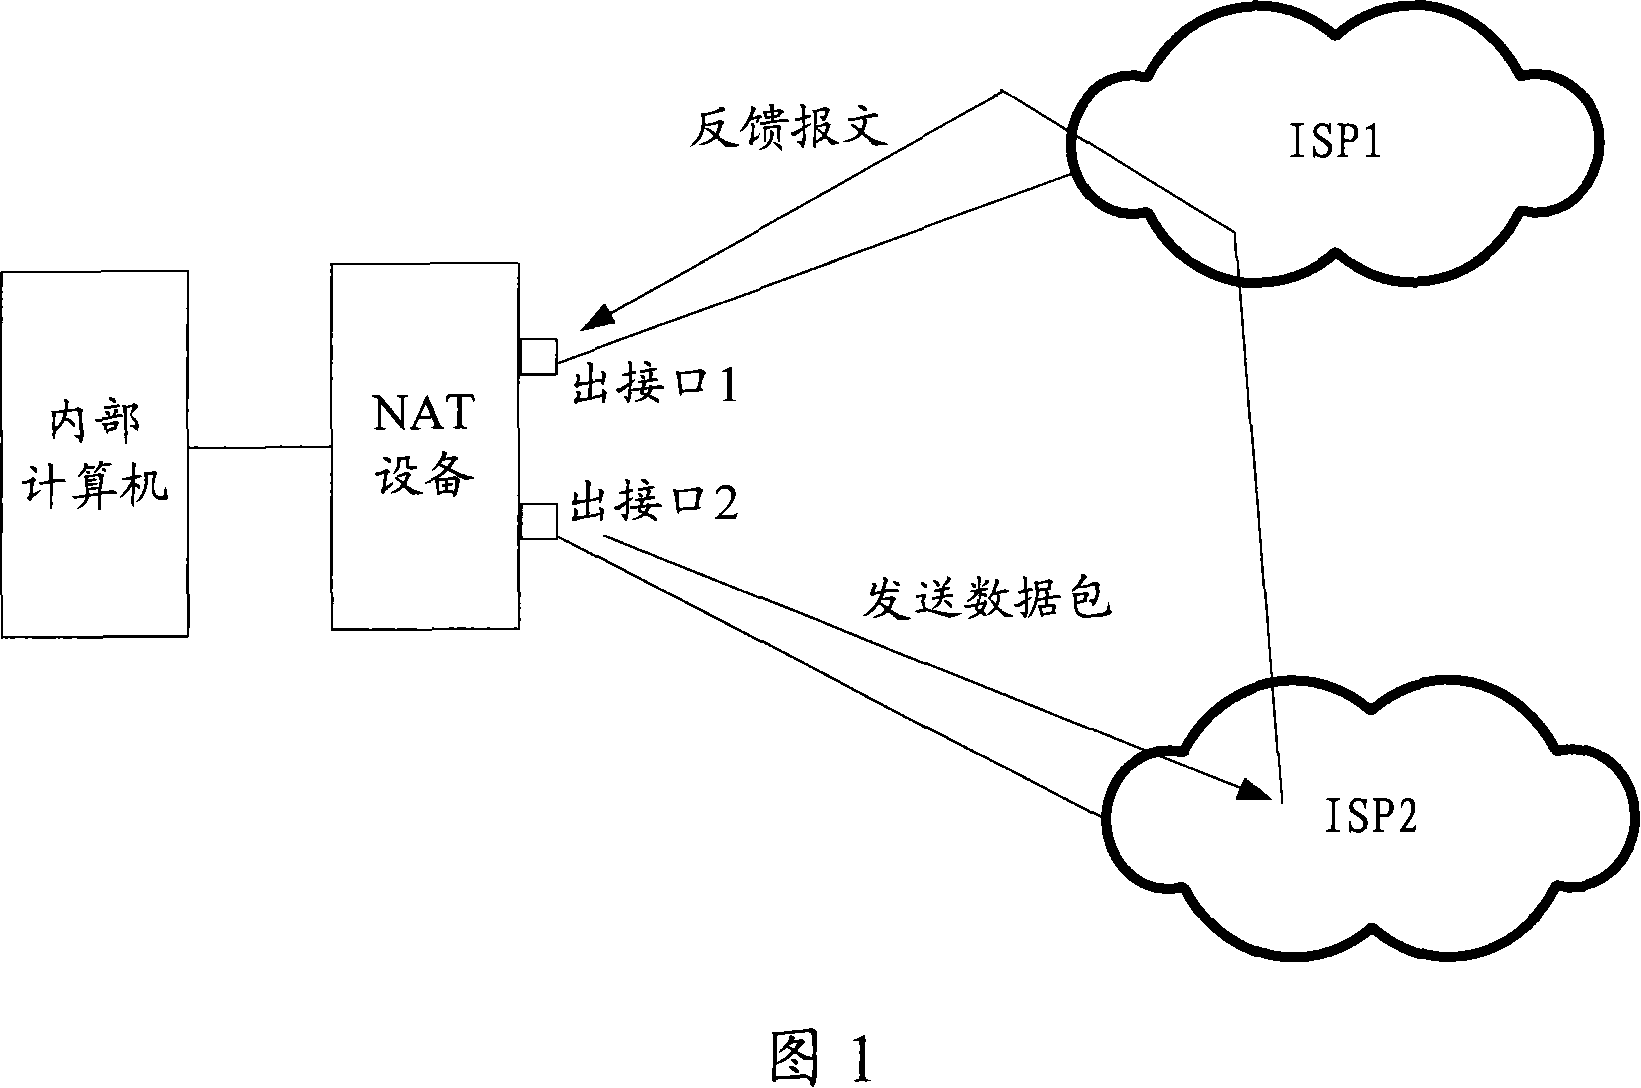 Network address converting attribute self-adaptive method and apparatus